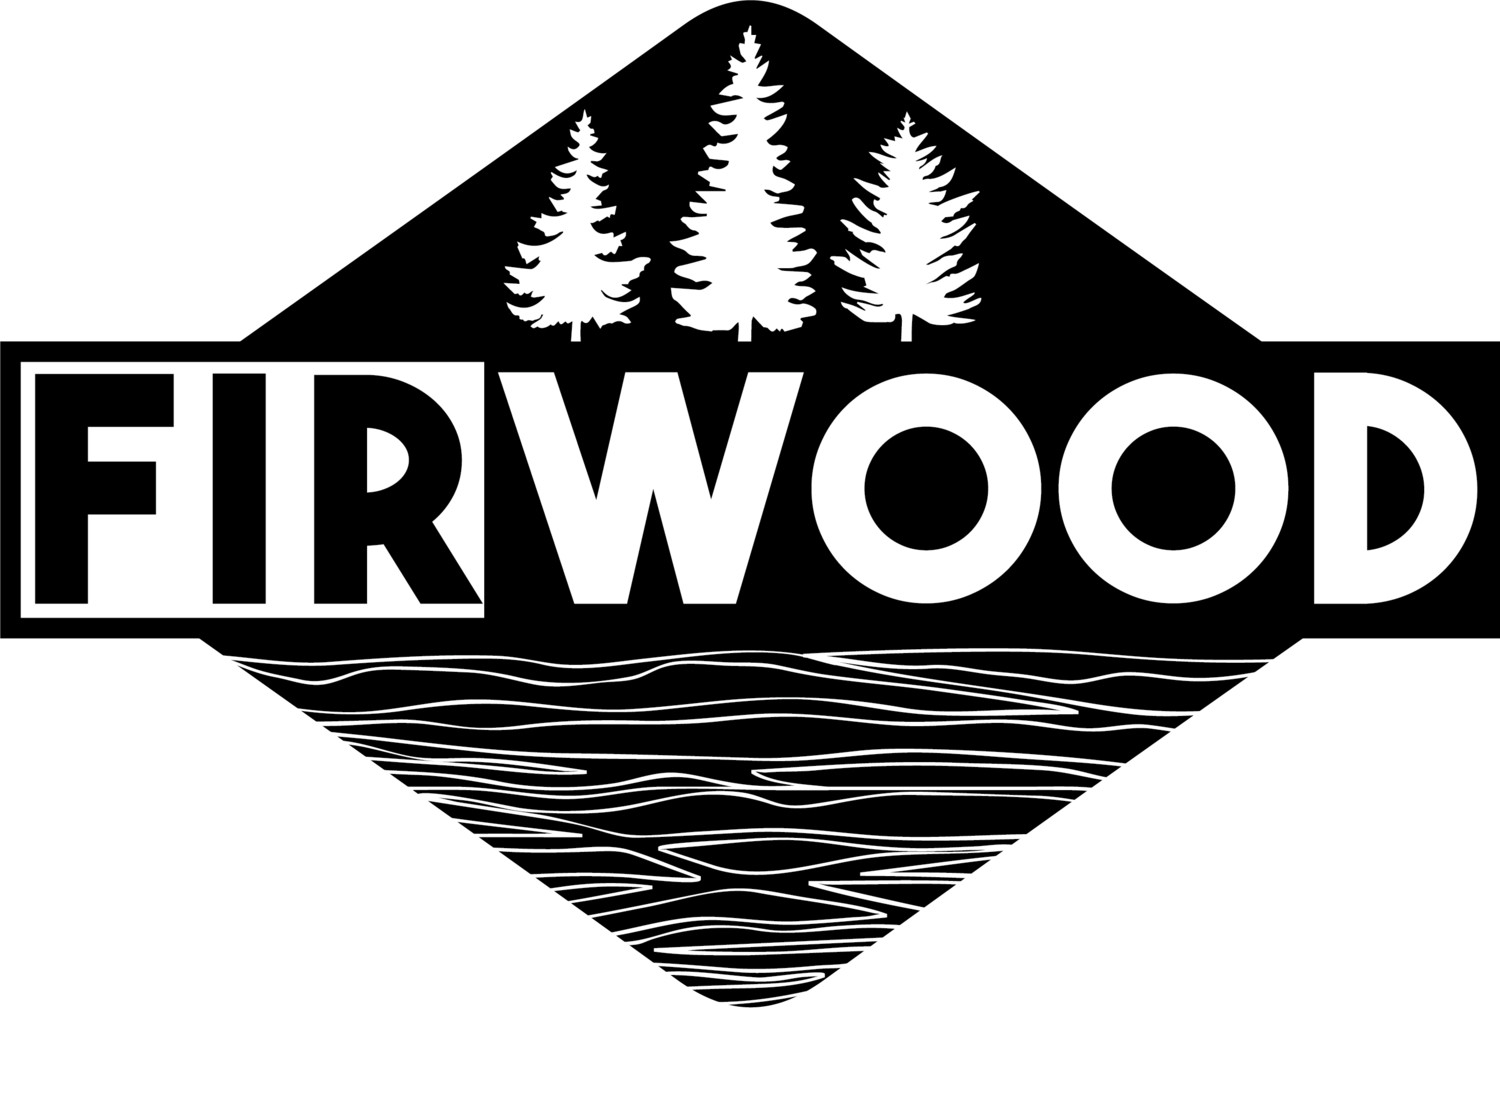 Camp Firwood